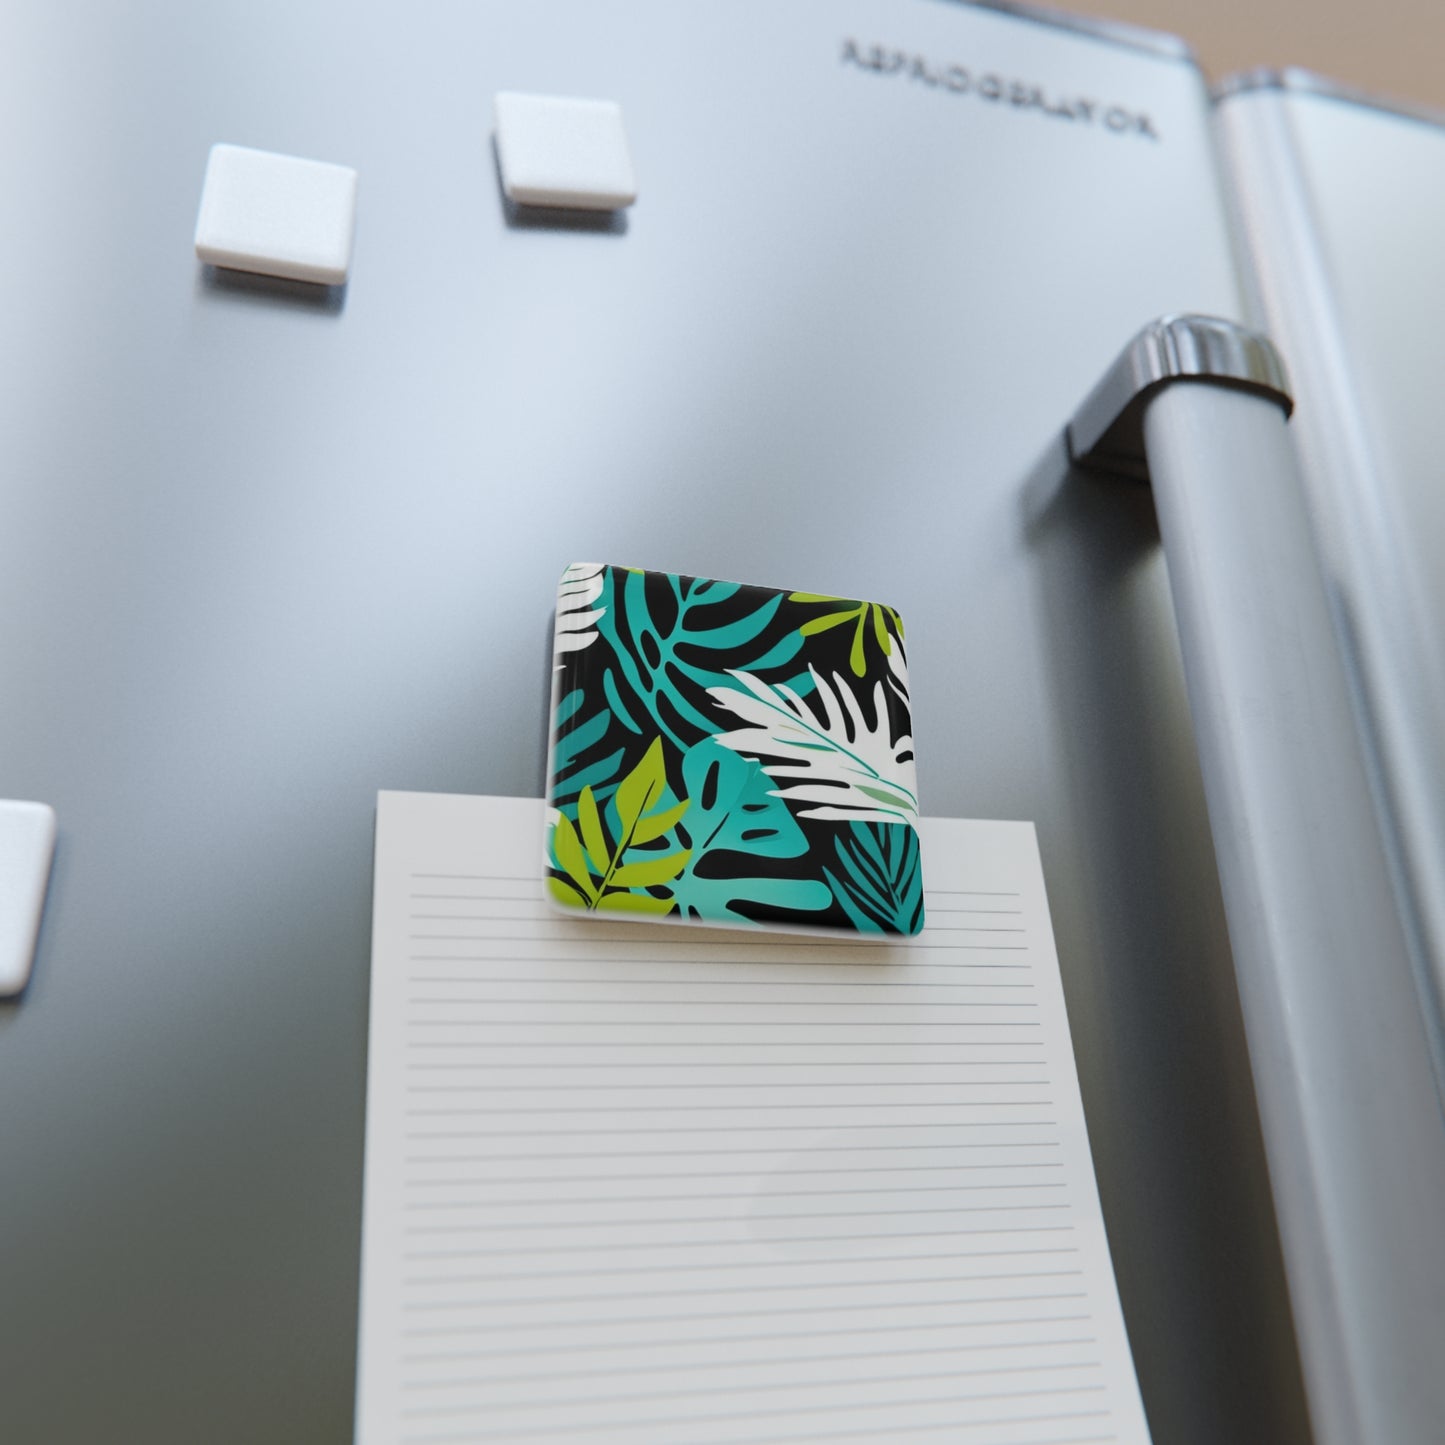 Undersea Tropical Forest Decorative Refrigerator Porcelain Magnet, Square